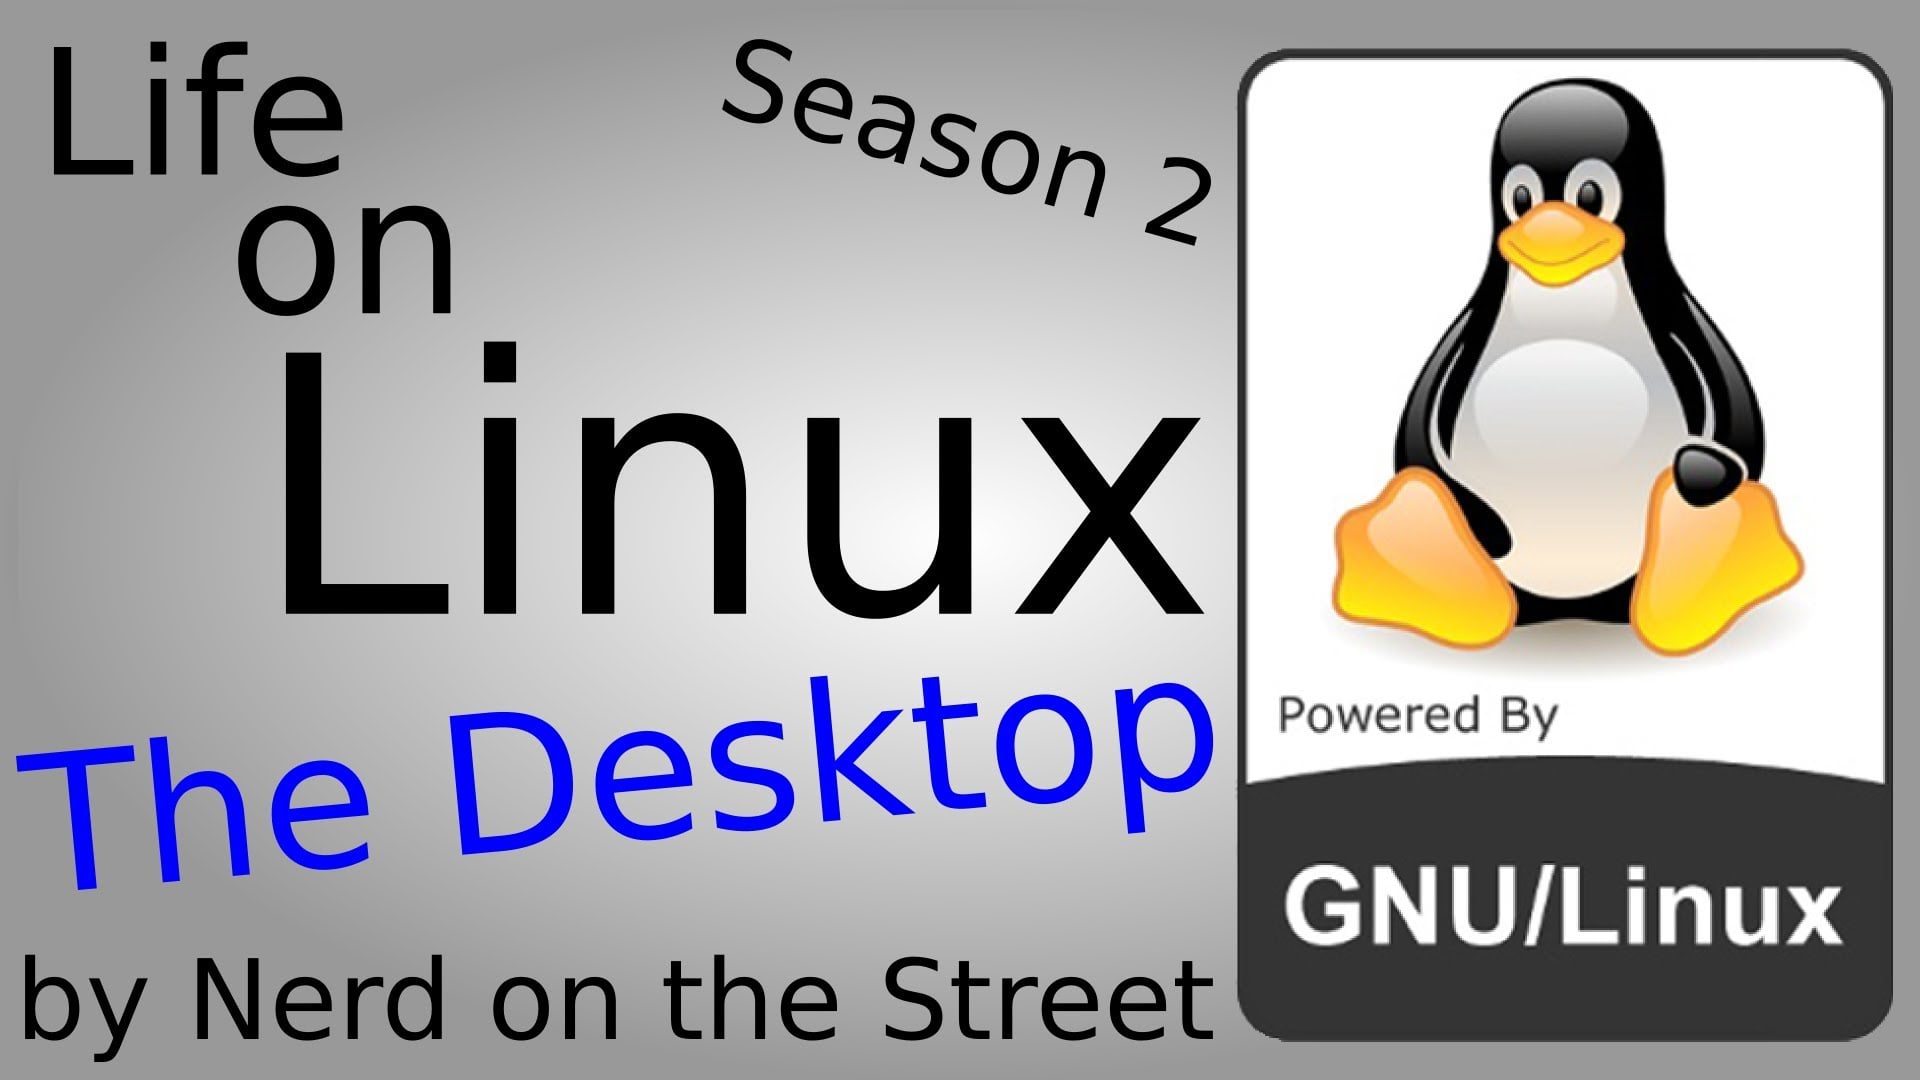 The Cinnamon Desktop - Life on Linux 2